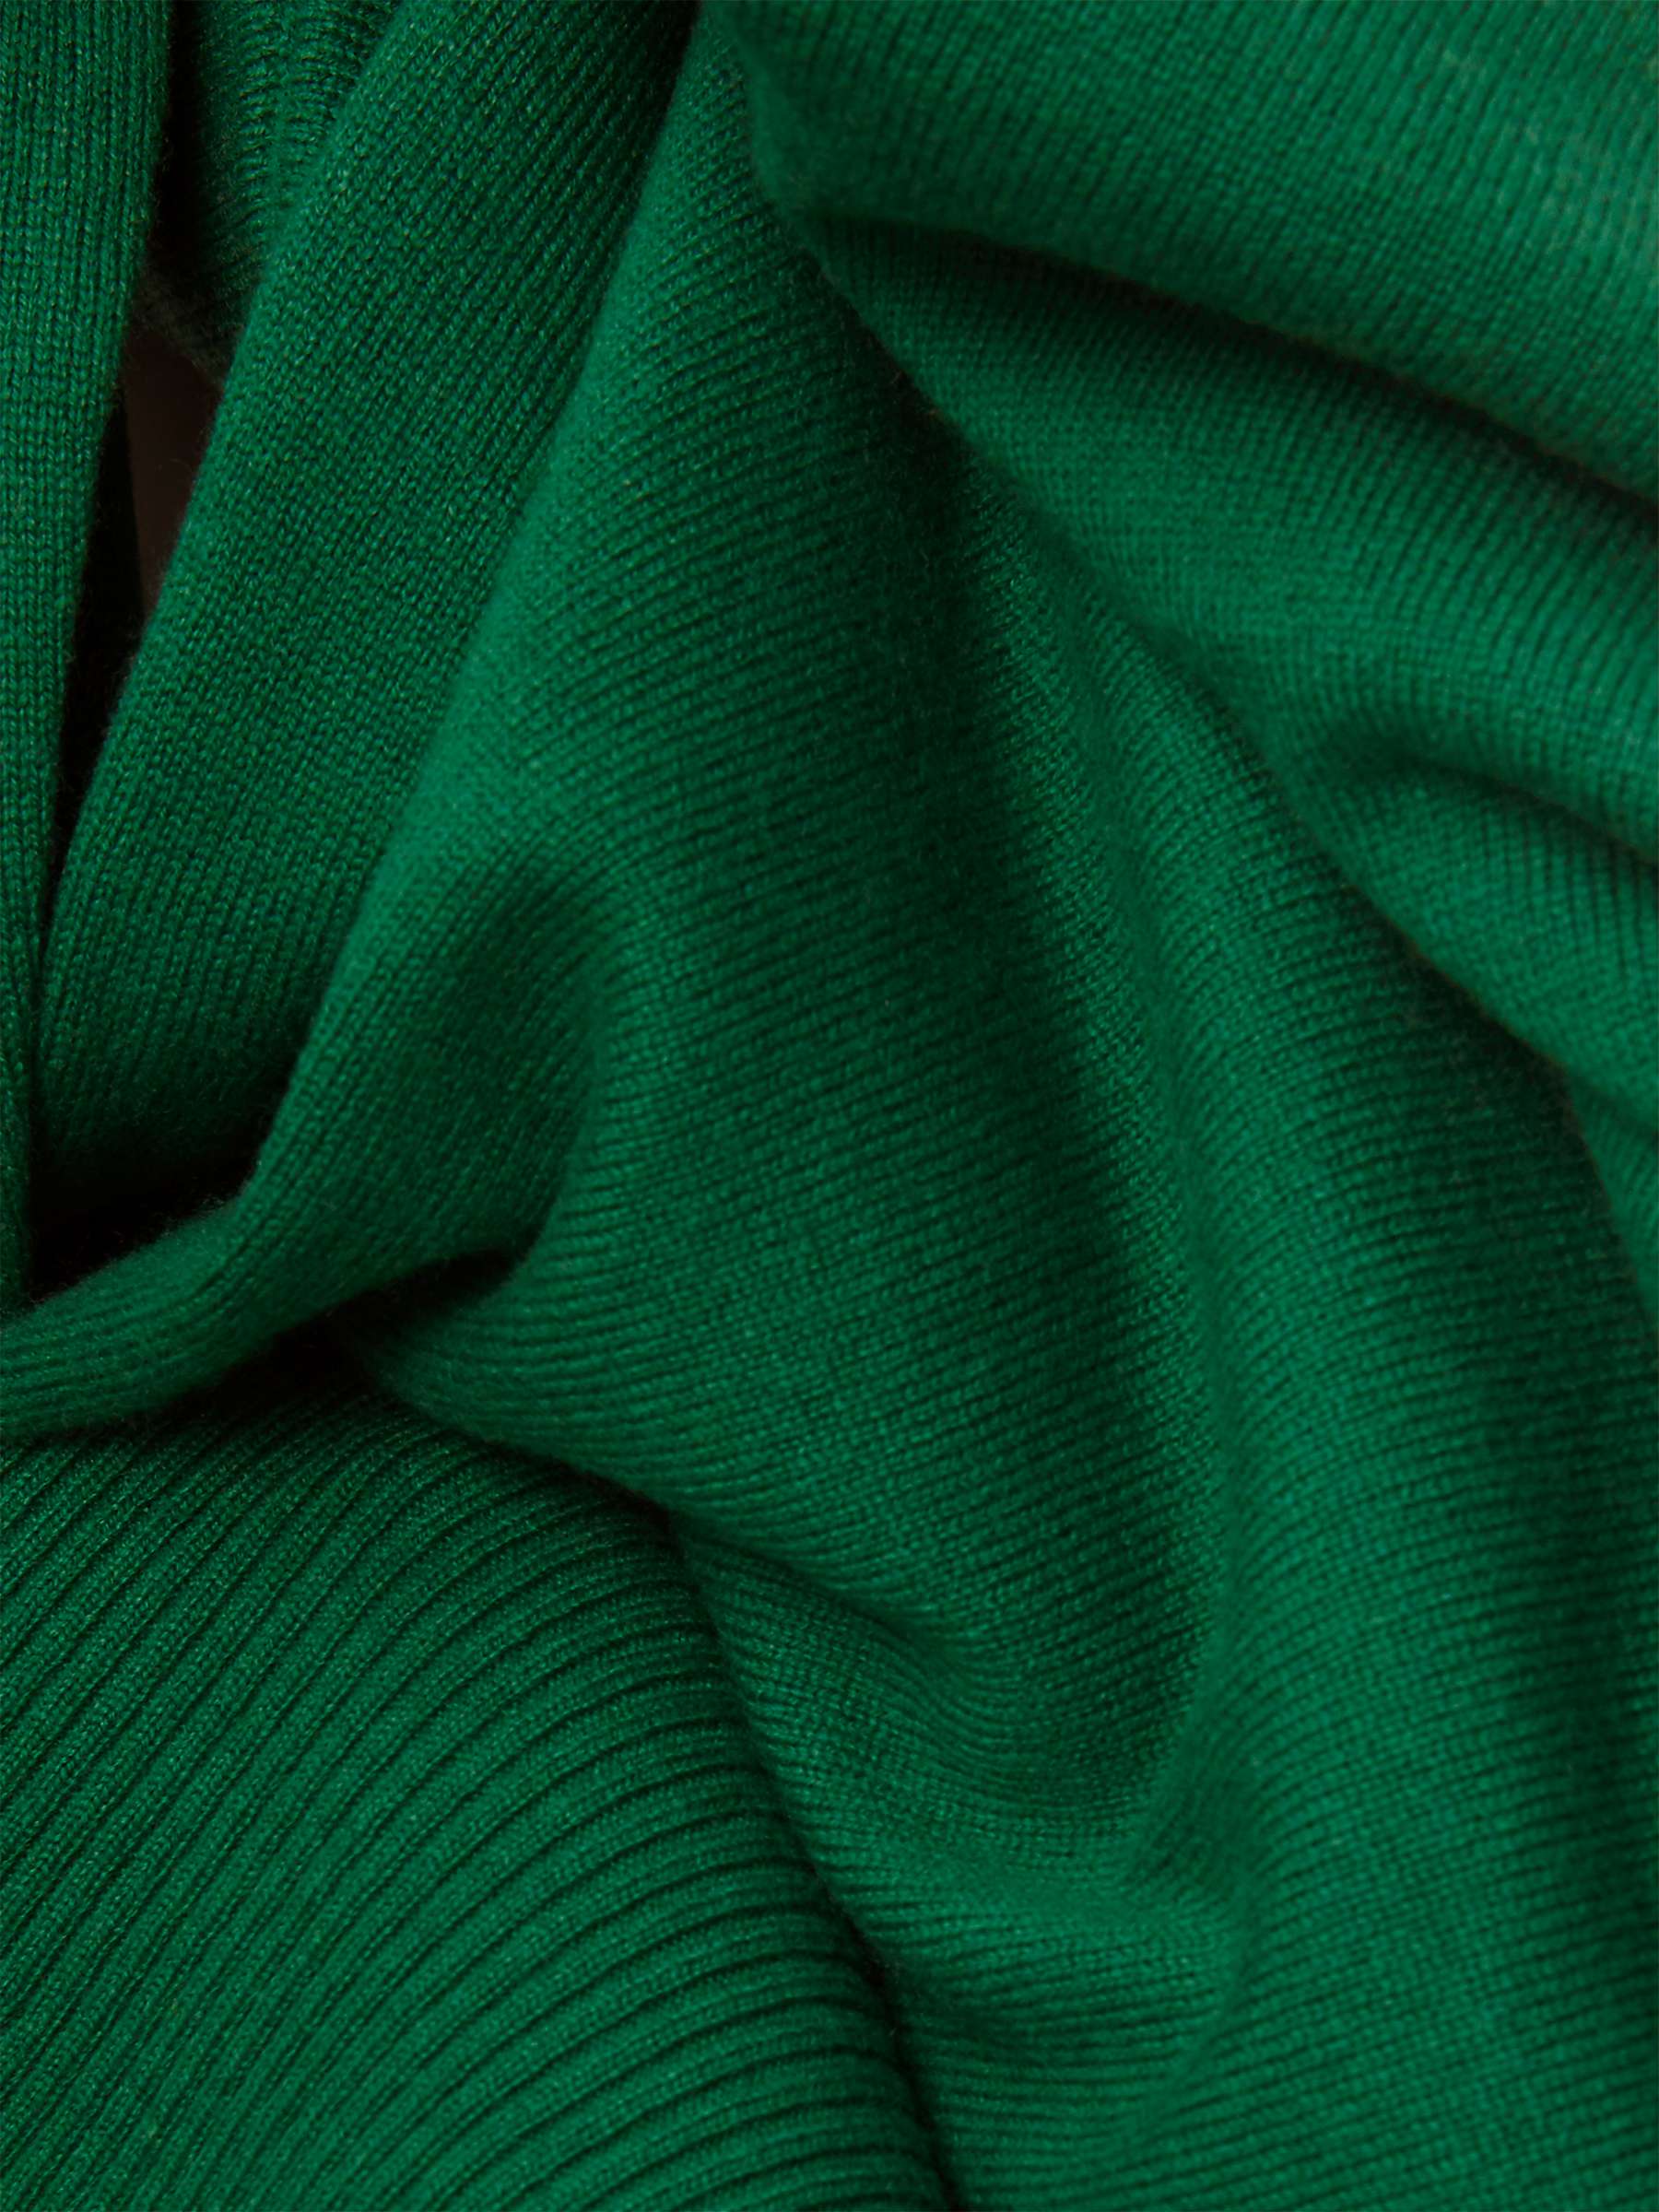 Buy Hobbs Talia Knitted Dress Online at johnlewis.com